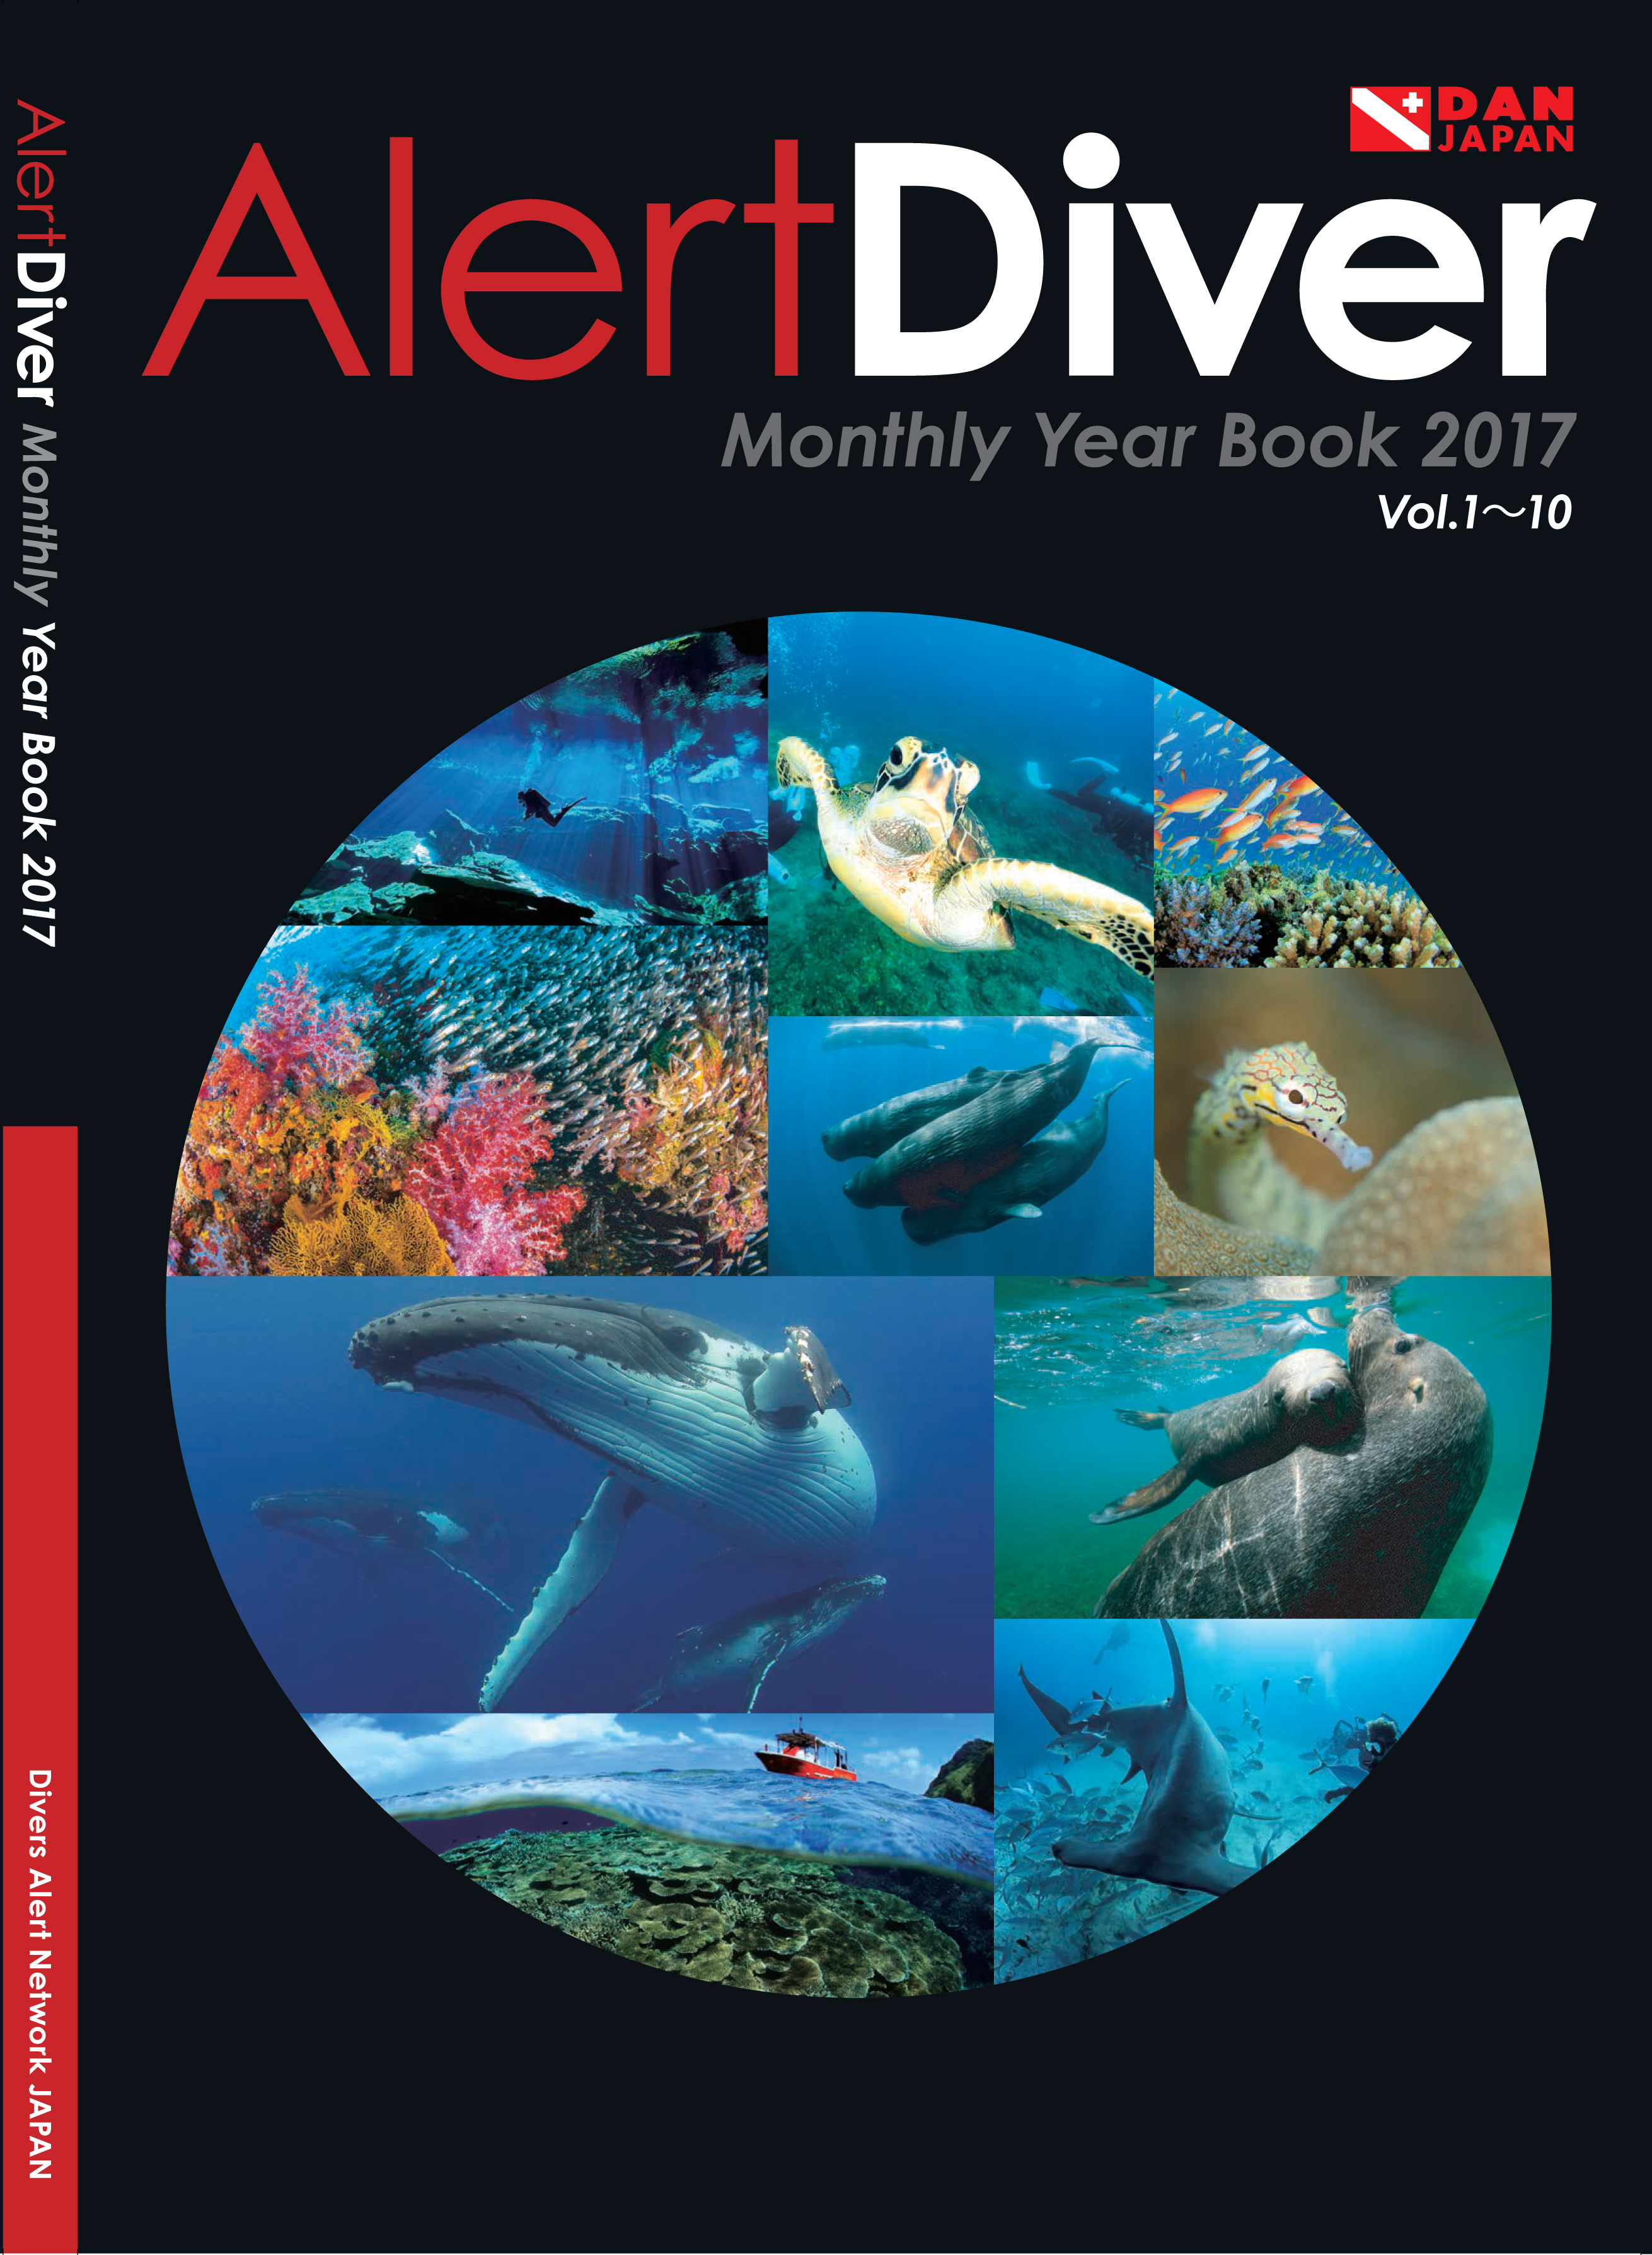 『 Alert Diver Monthly Year Book 2017』  
判型：A4判／並製 
ページ数：168ページ  
販売価格：3,200円（税込）       
※DAN JAPAN会員特別価格2,800円（税込）
 